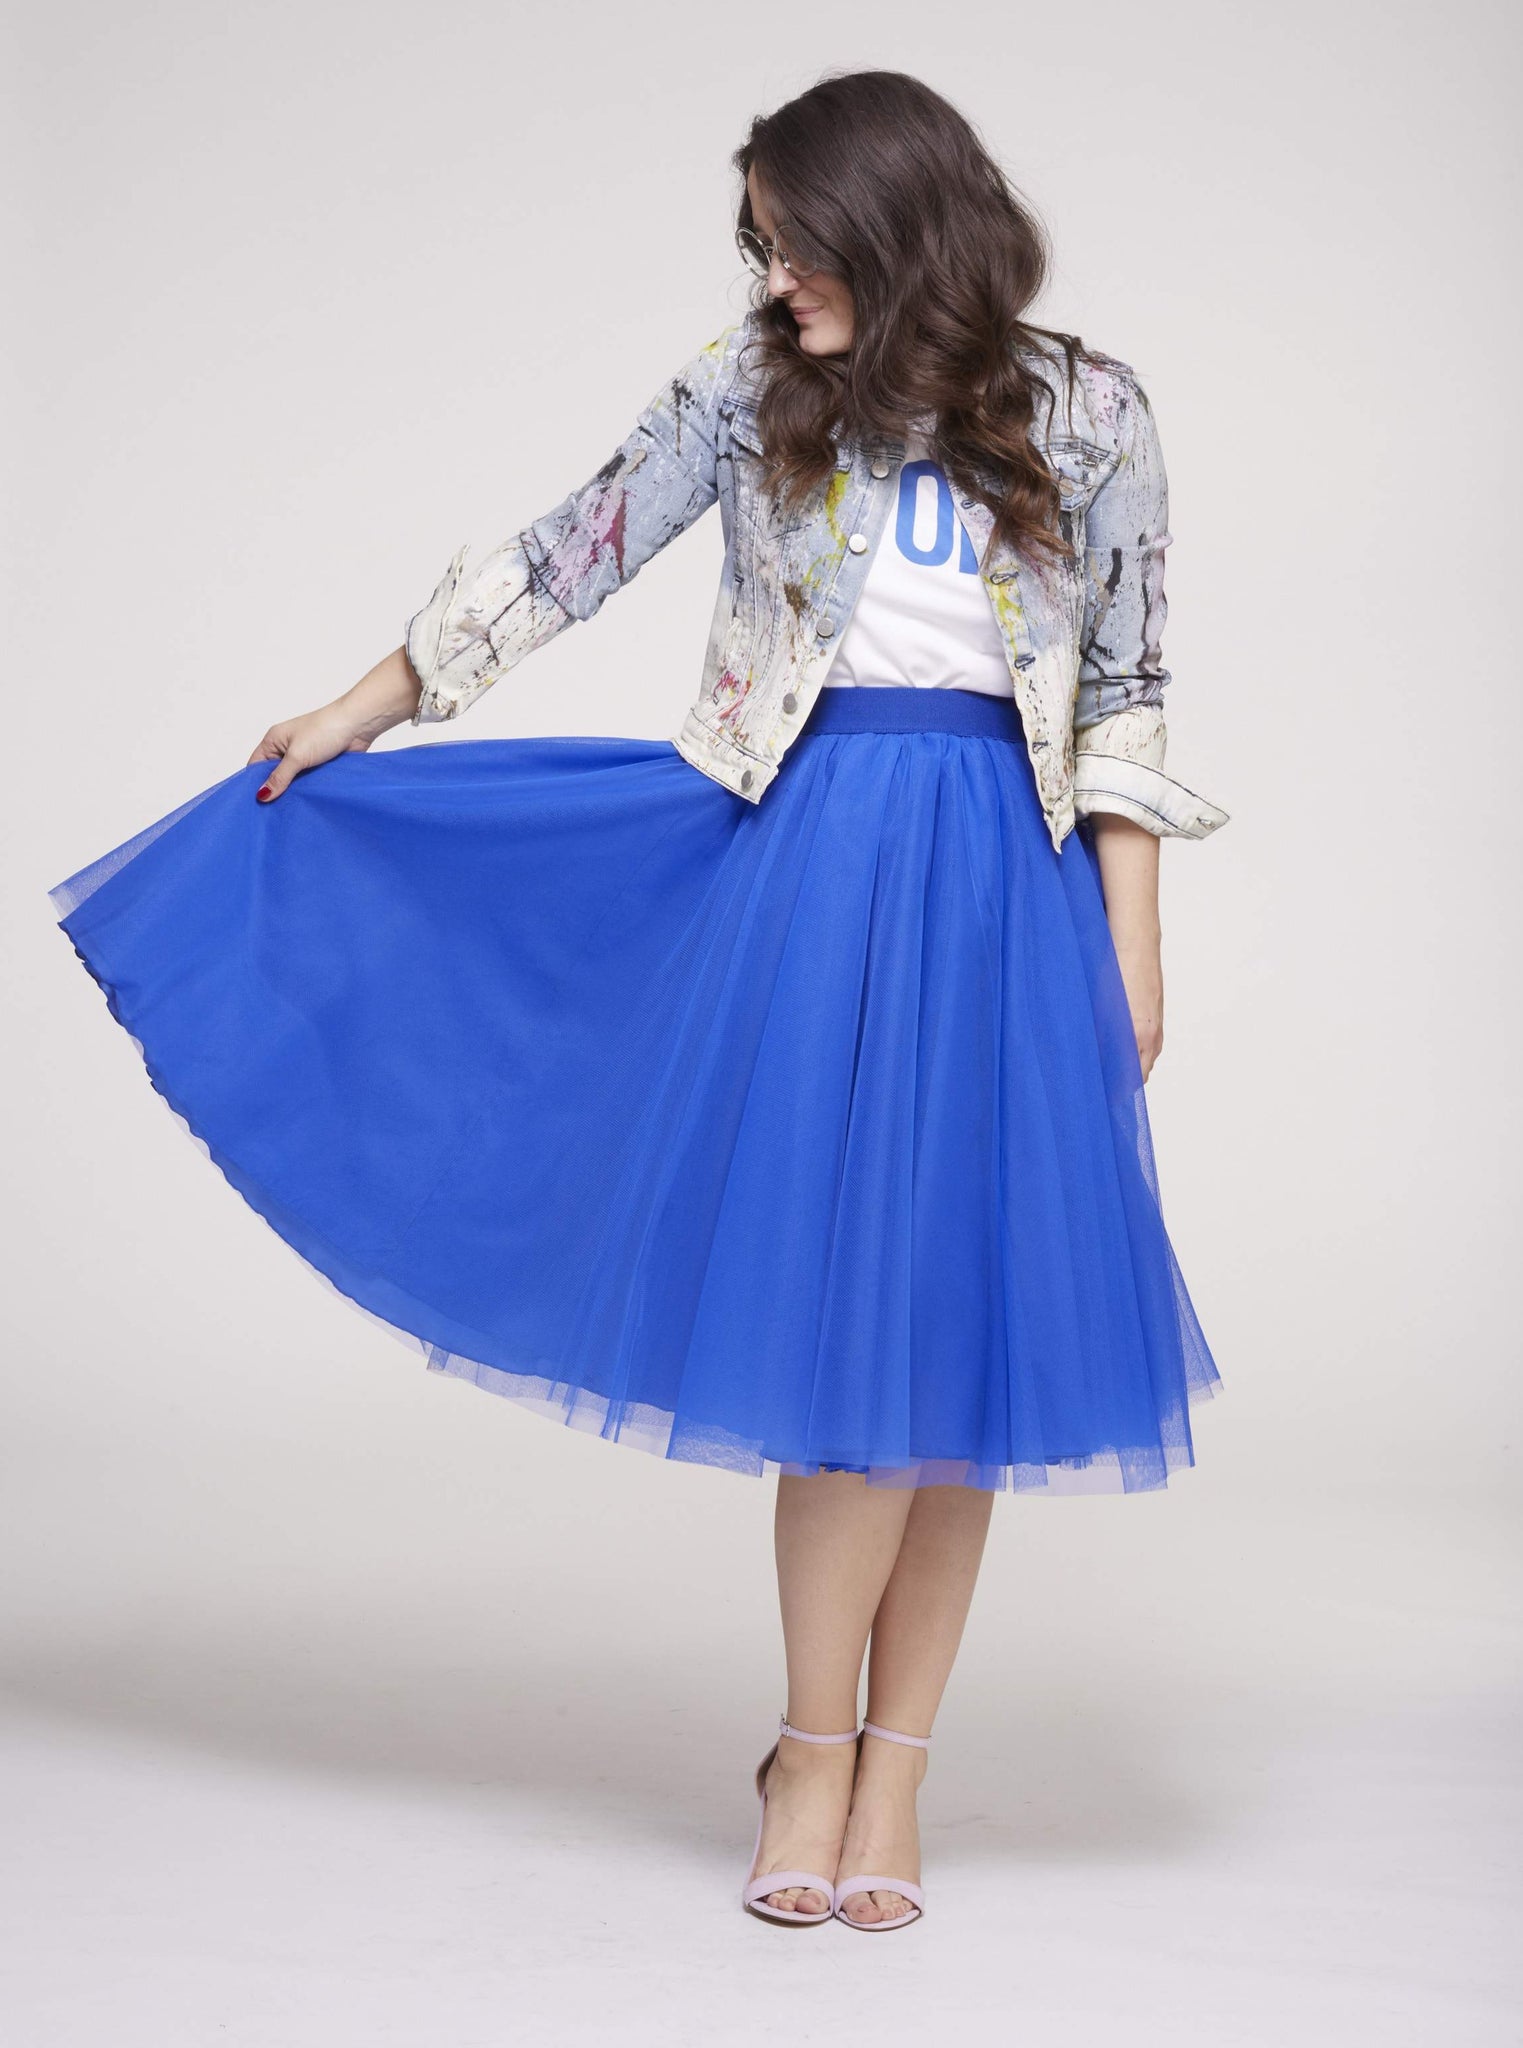 Image of: Blue tulle skirt